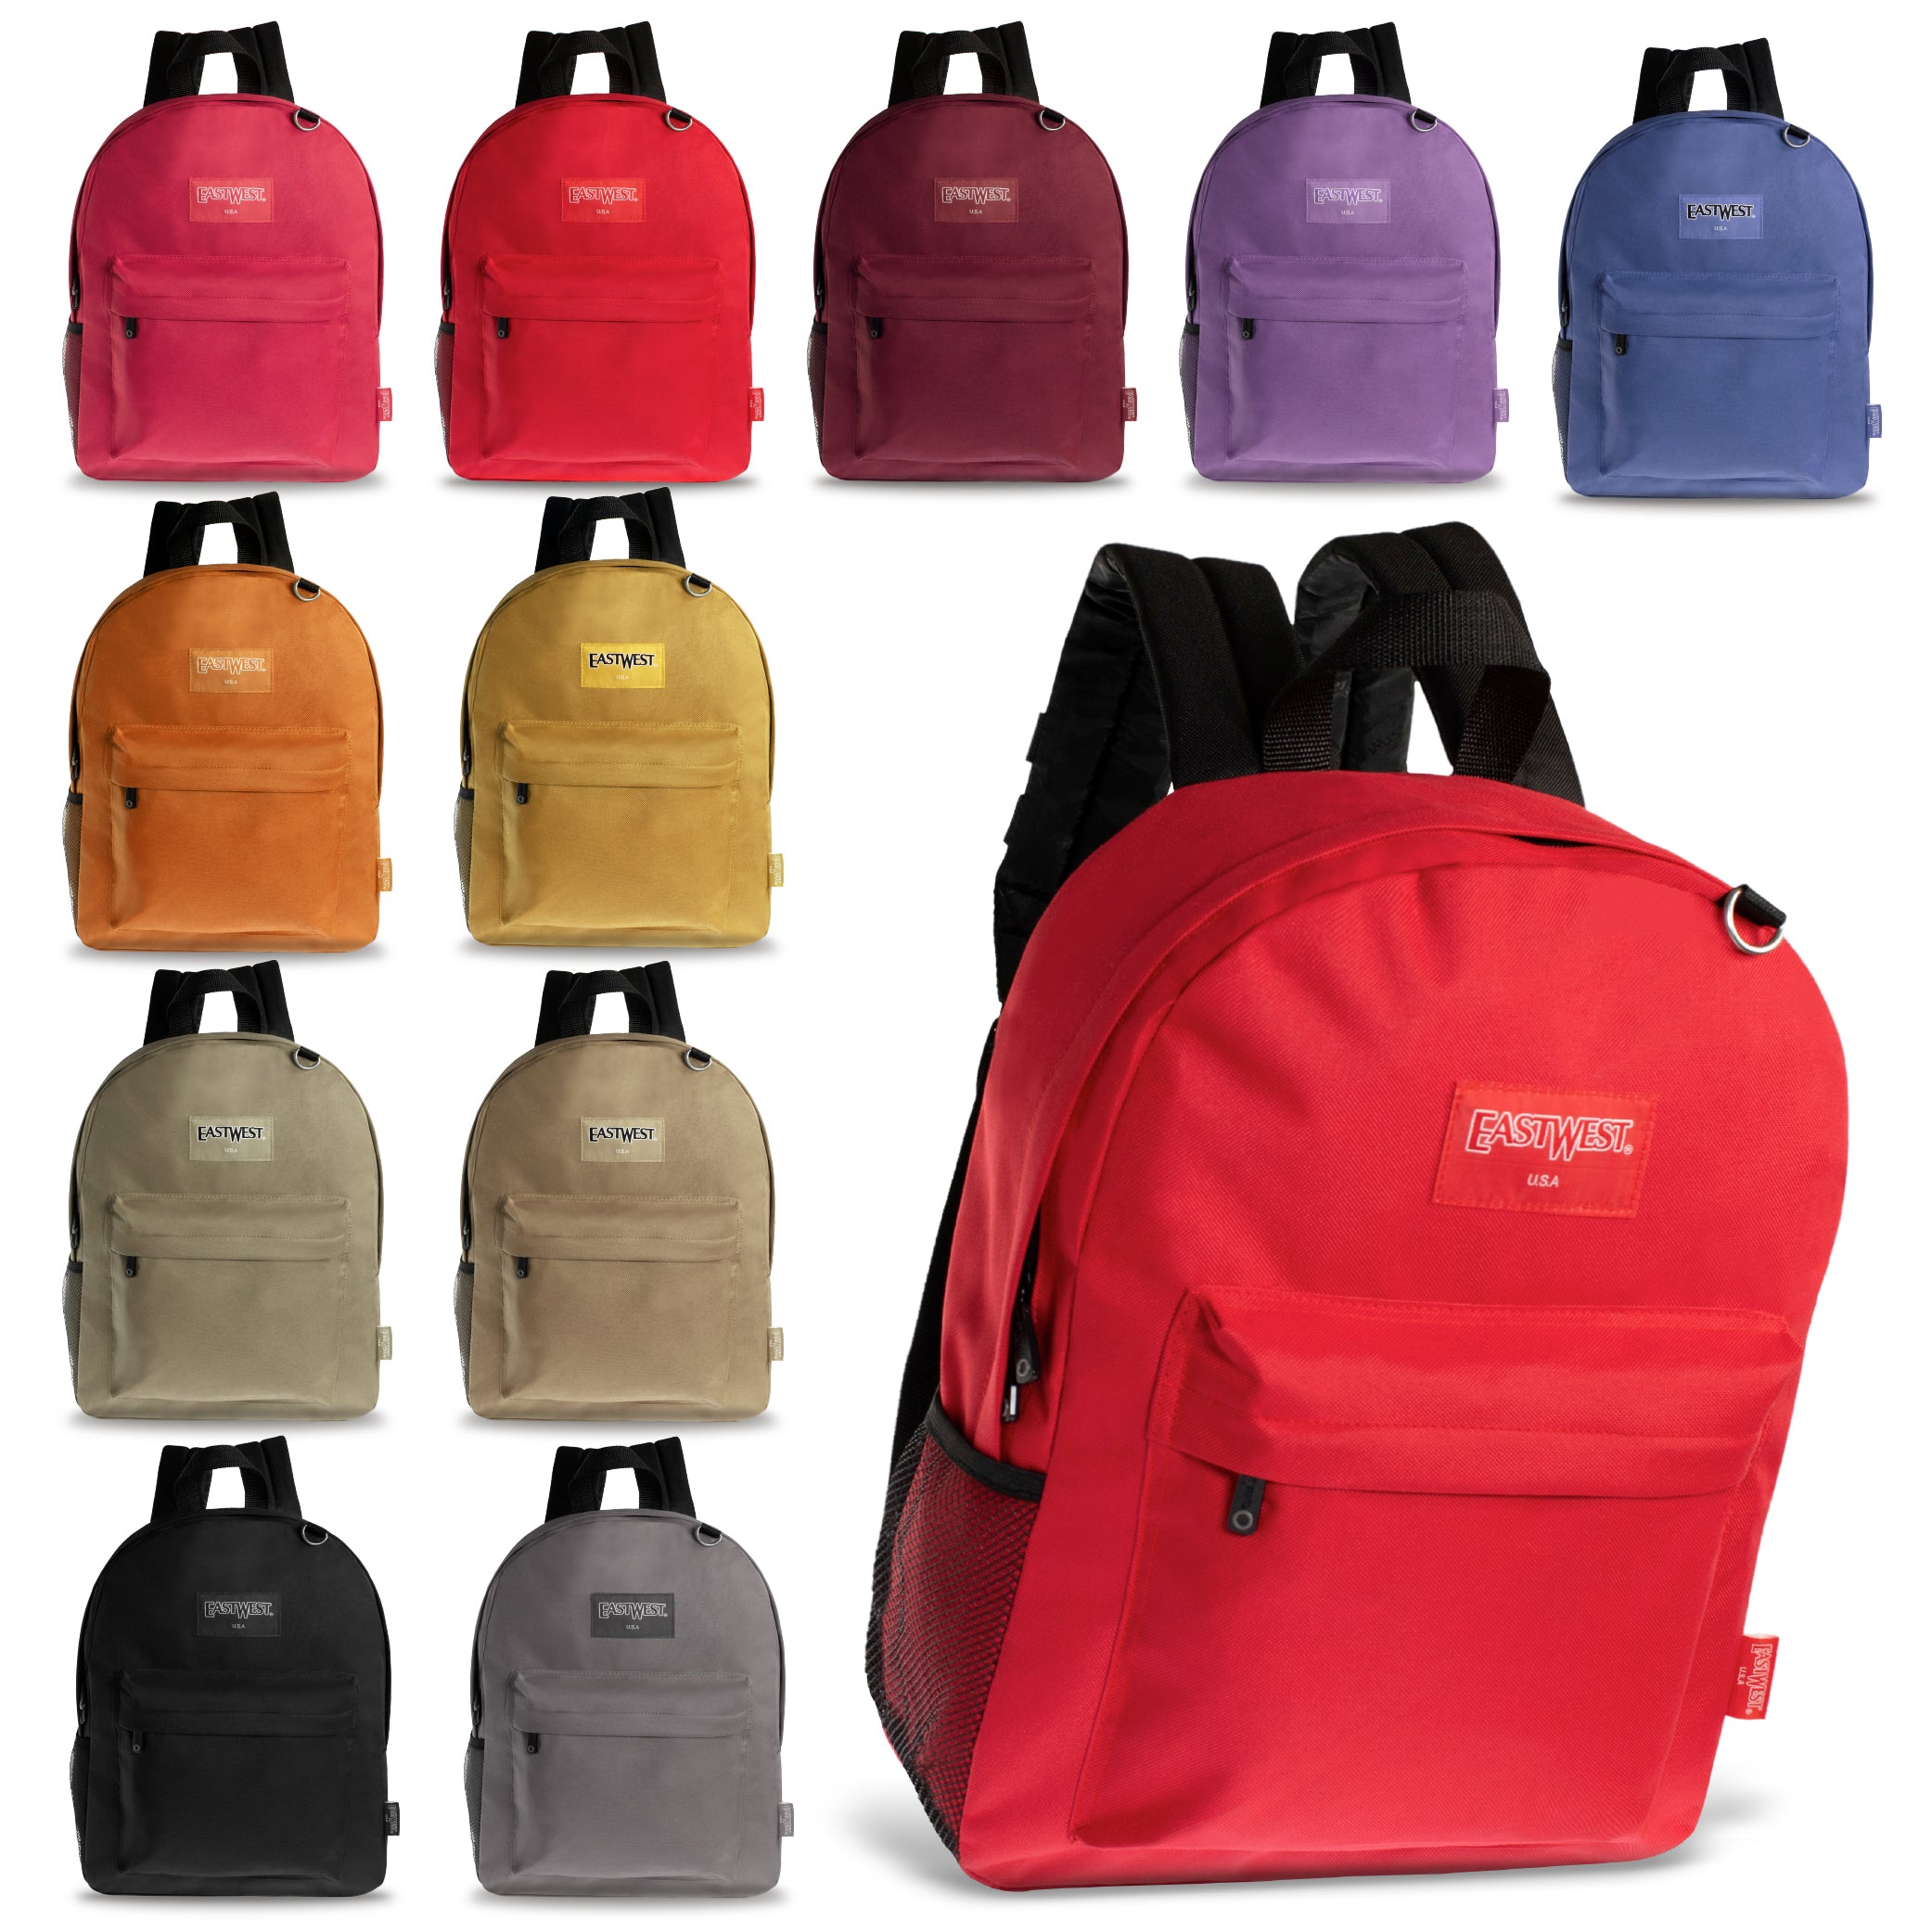 17" Kids Basic Wholesale Backpack in Assorted Colors - Bulk Case of 24 Backpacks